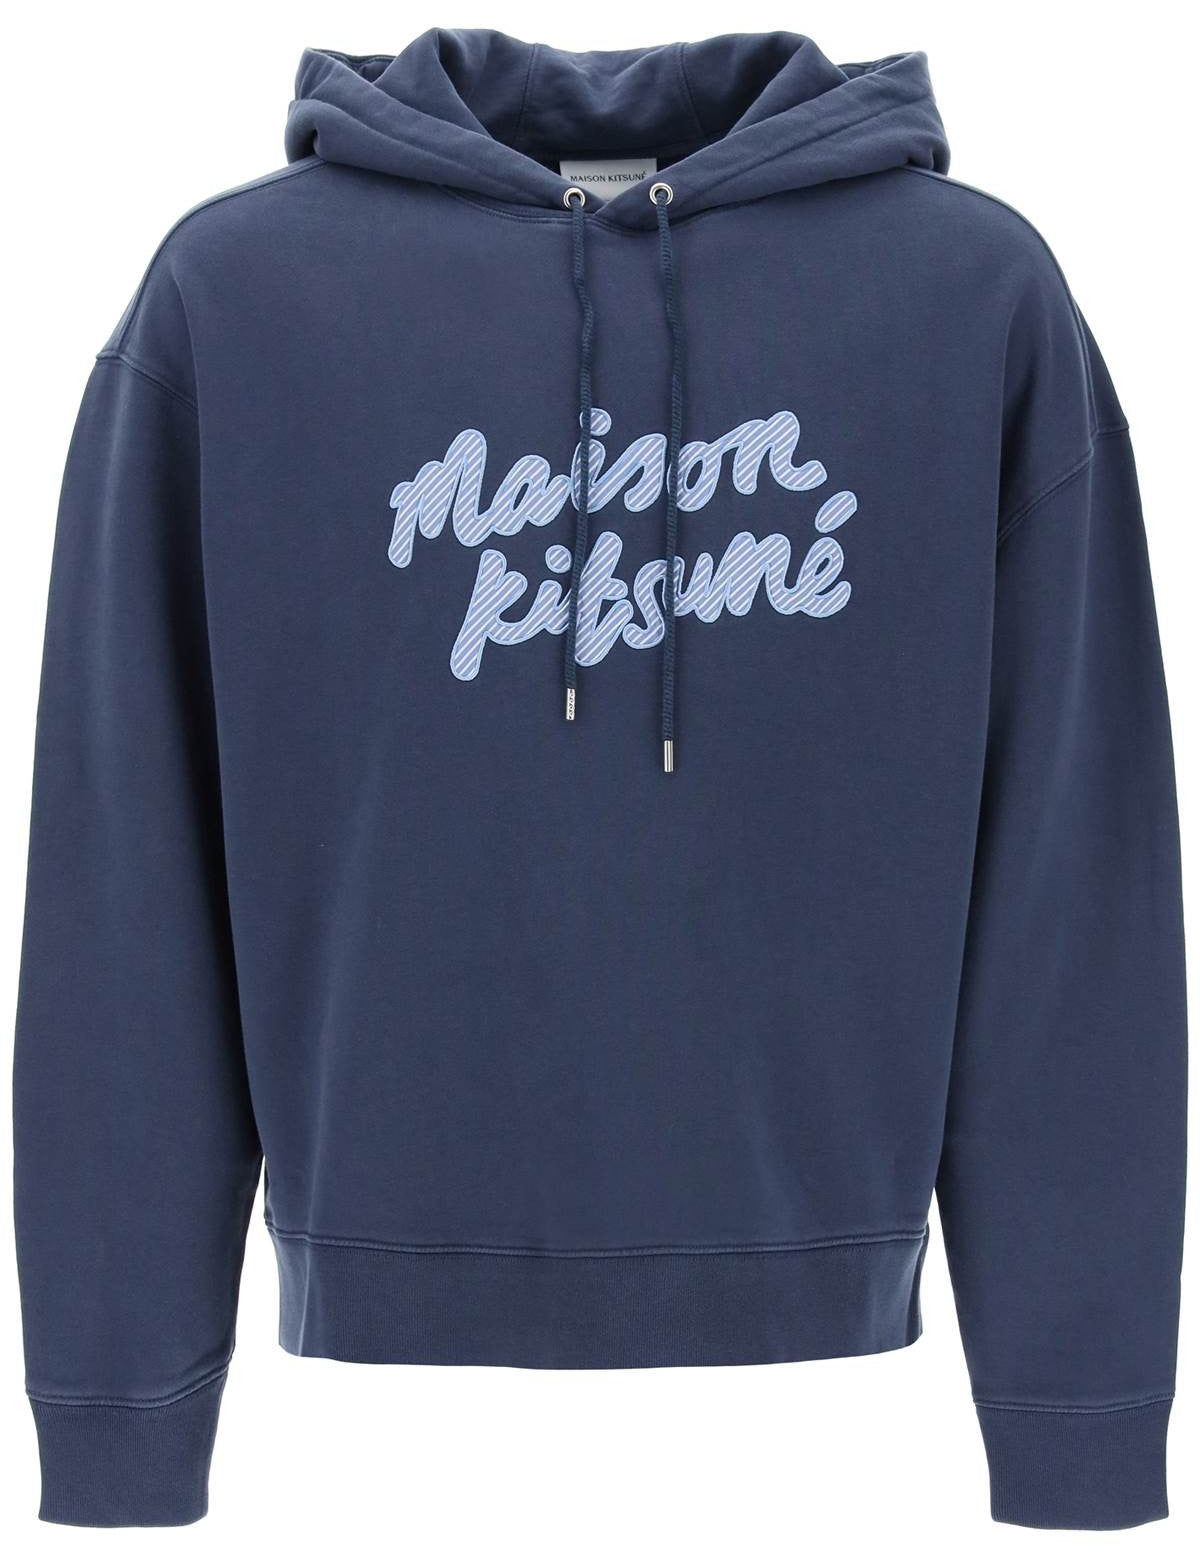 maison-kitsune-hooded-sweatshirt-with-embroidered-logo.jpg